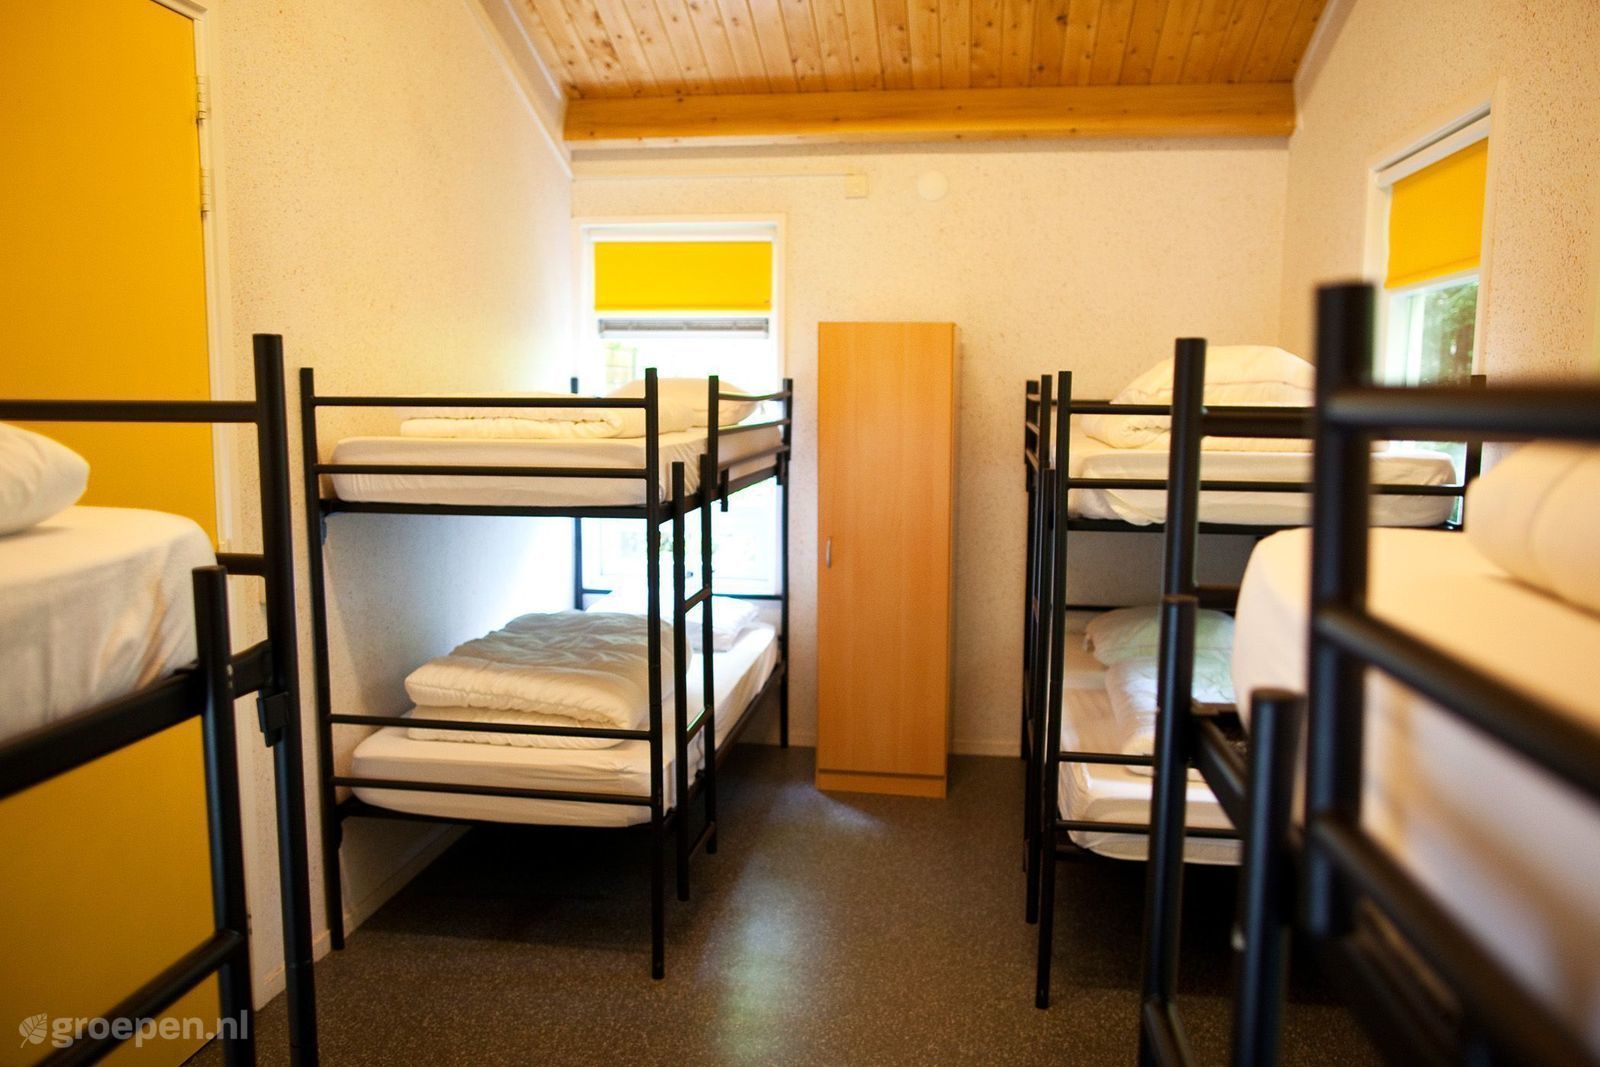 Group accommodation Diffelen